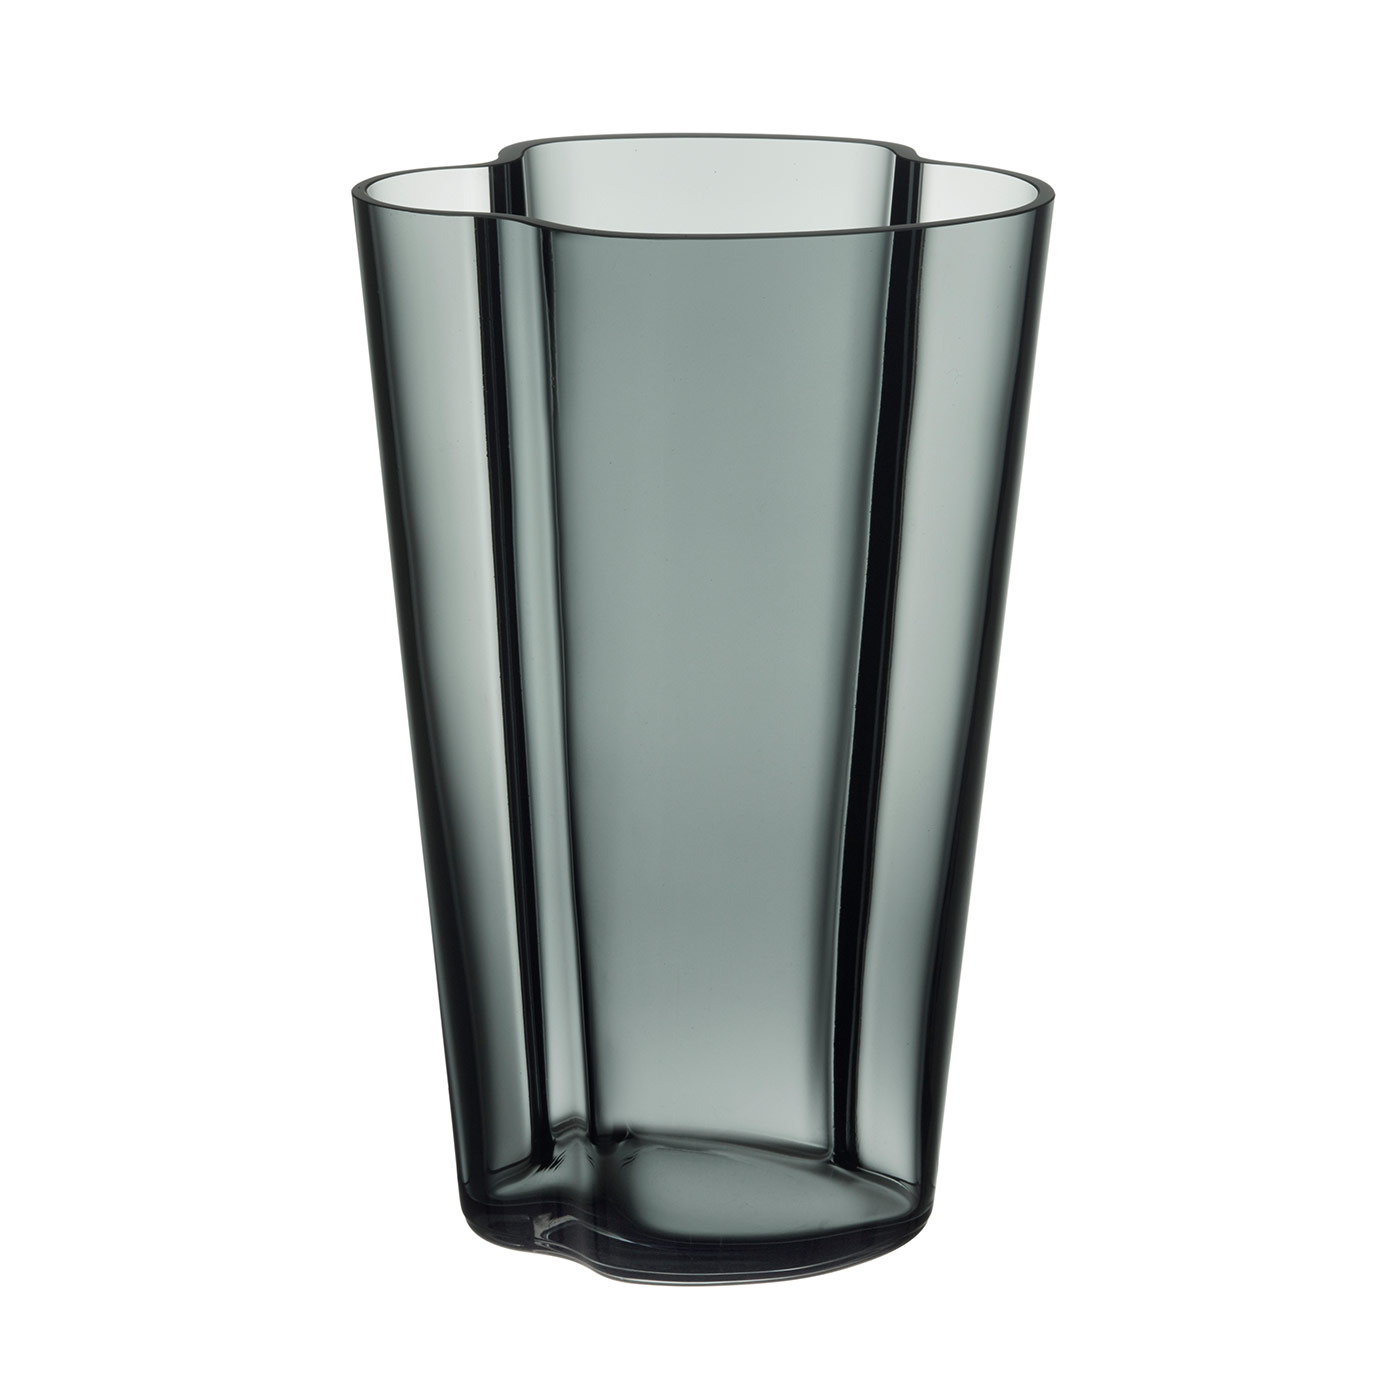 Hohe graue Alvar Aalto Vase bei der Boutique Danoise